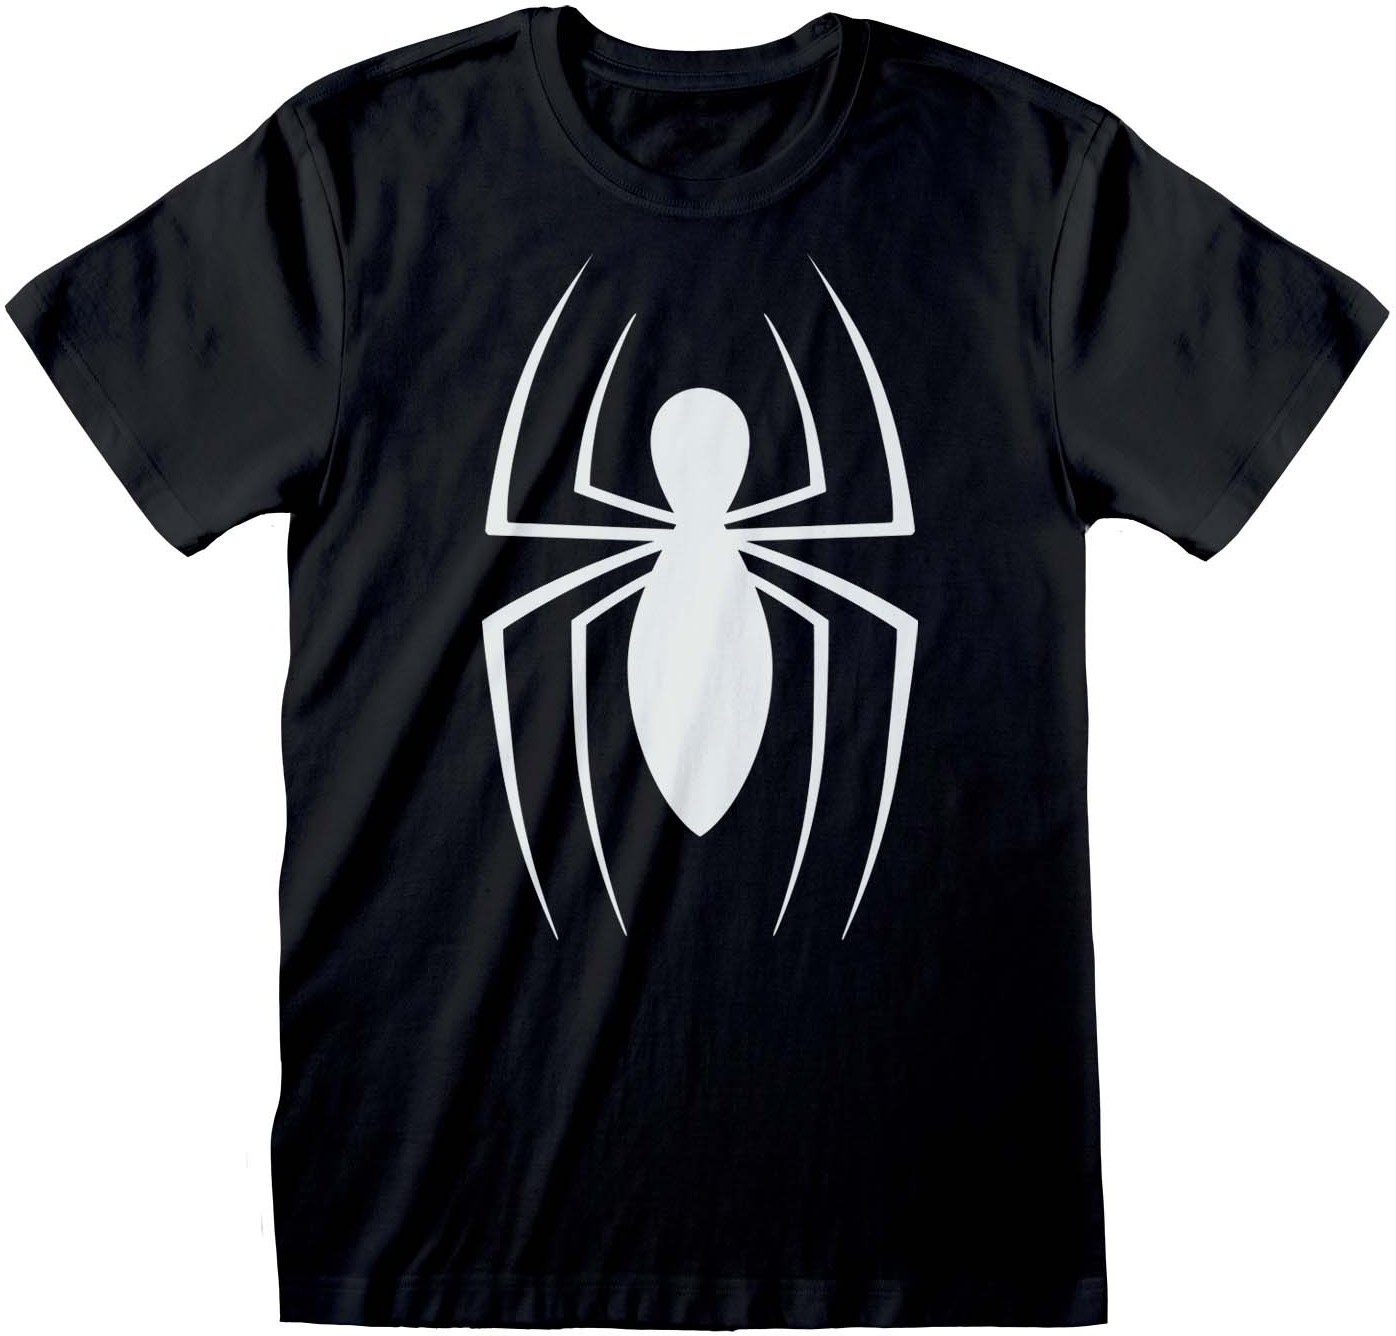 Marvel Comics - Spider-Man Classic Logo T-Shirt